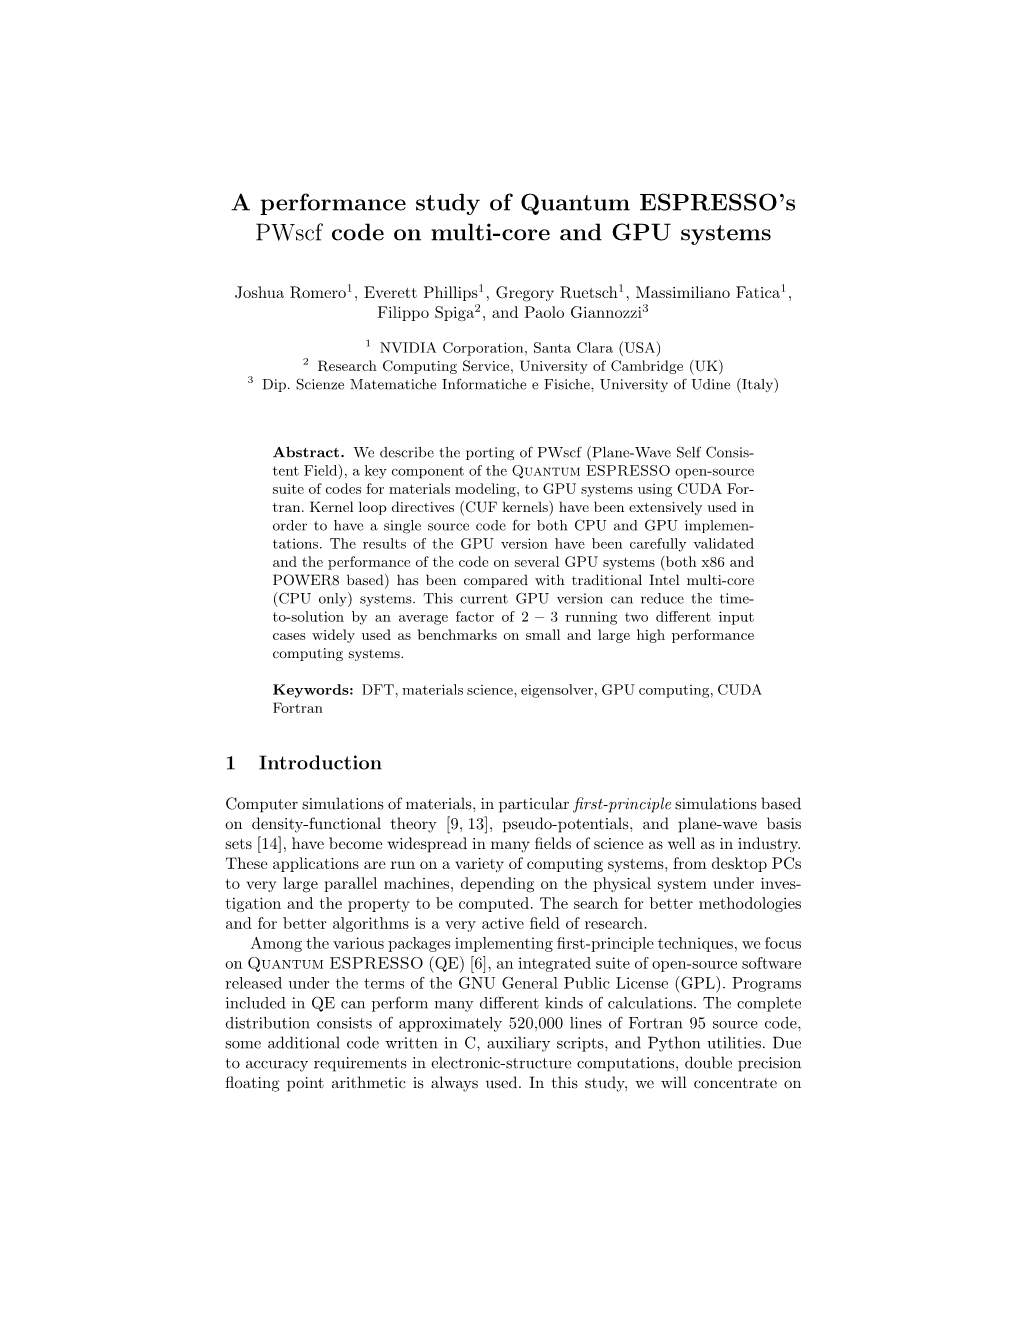 A Performance Study of Quantum ESPRESSO's Pwscf Code on Multi